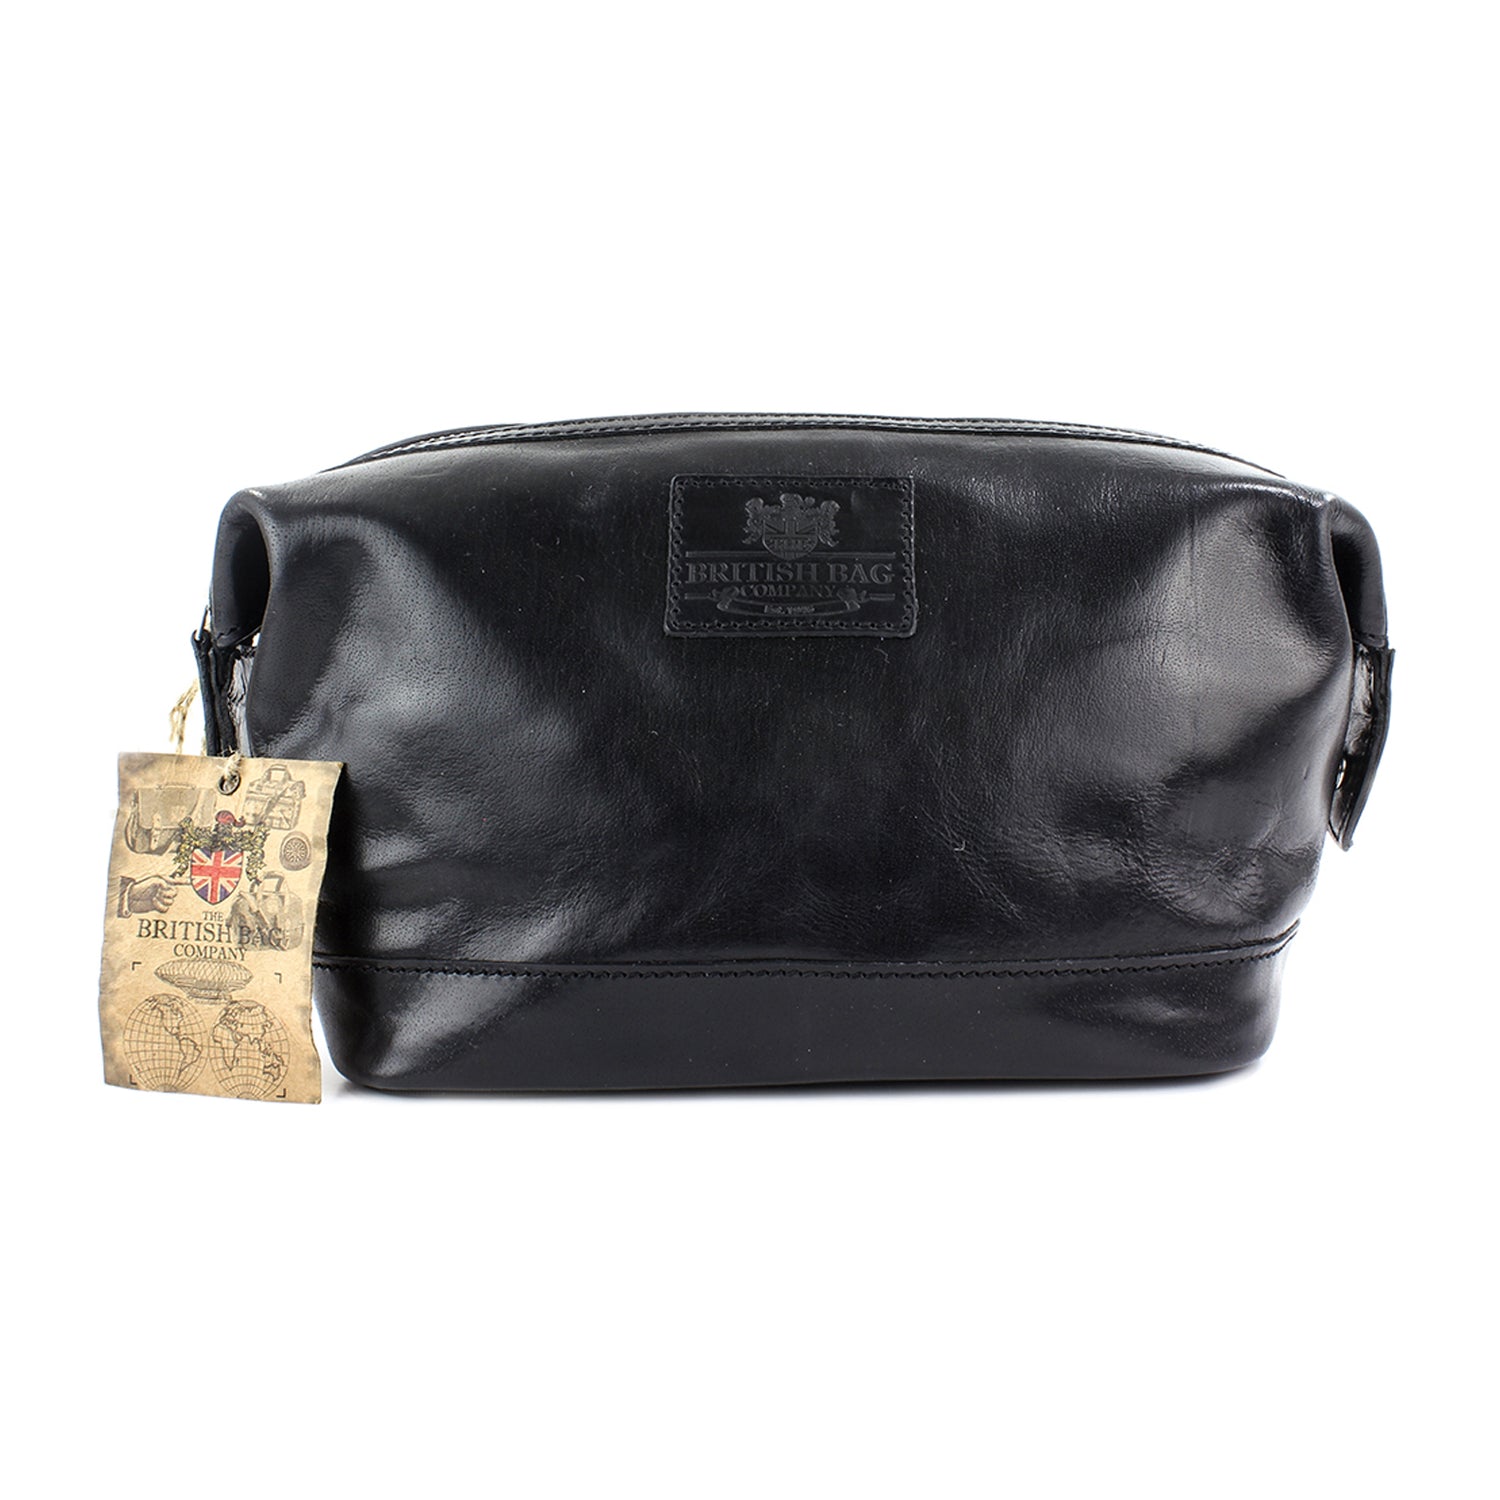 British Bag Co. Leather Washbag